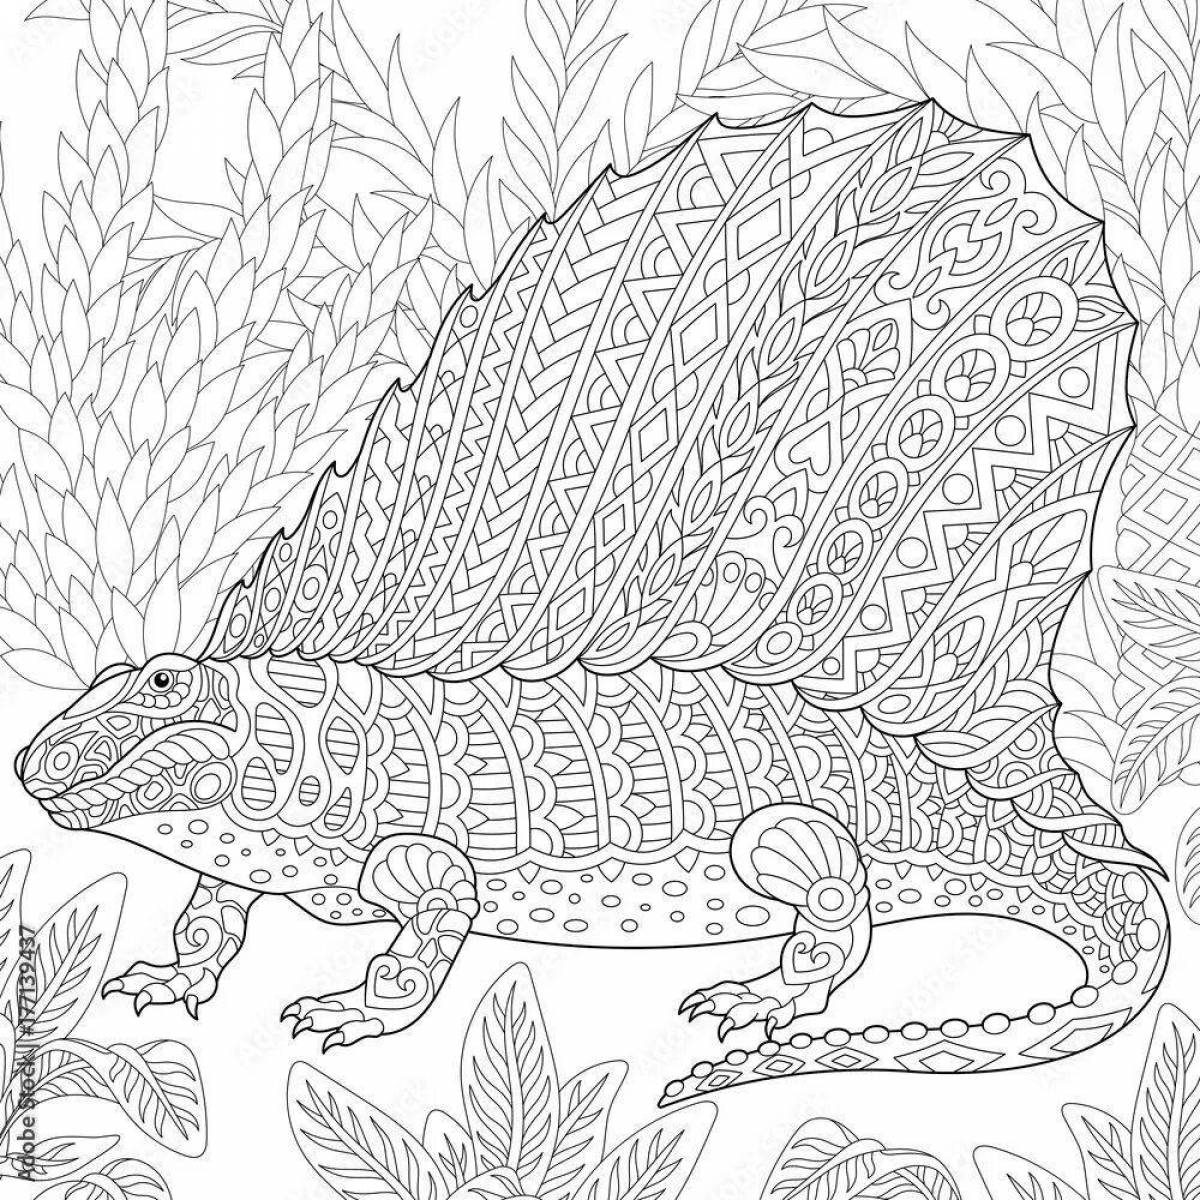 Coloring book joyful antistress crocodile